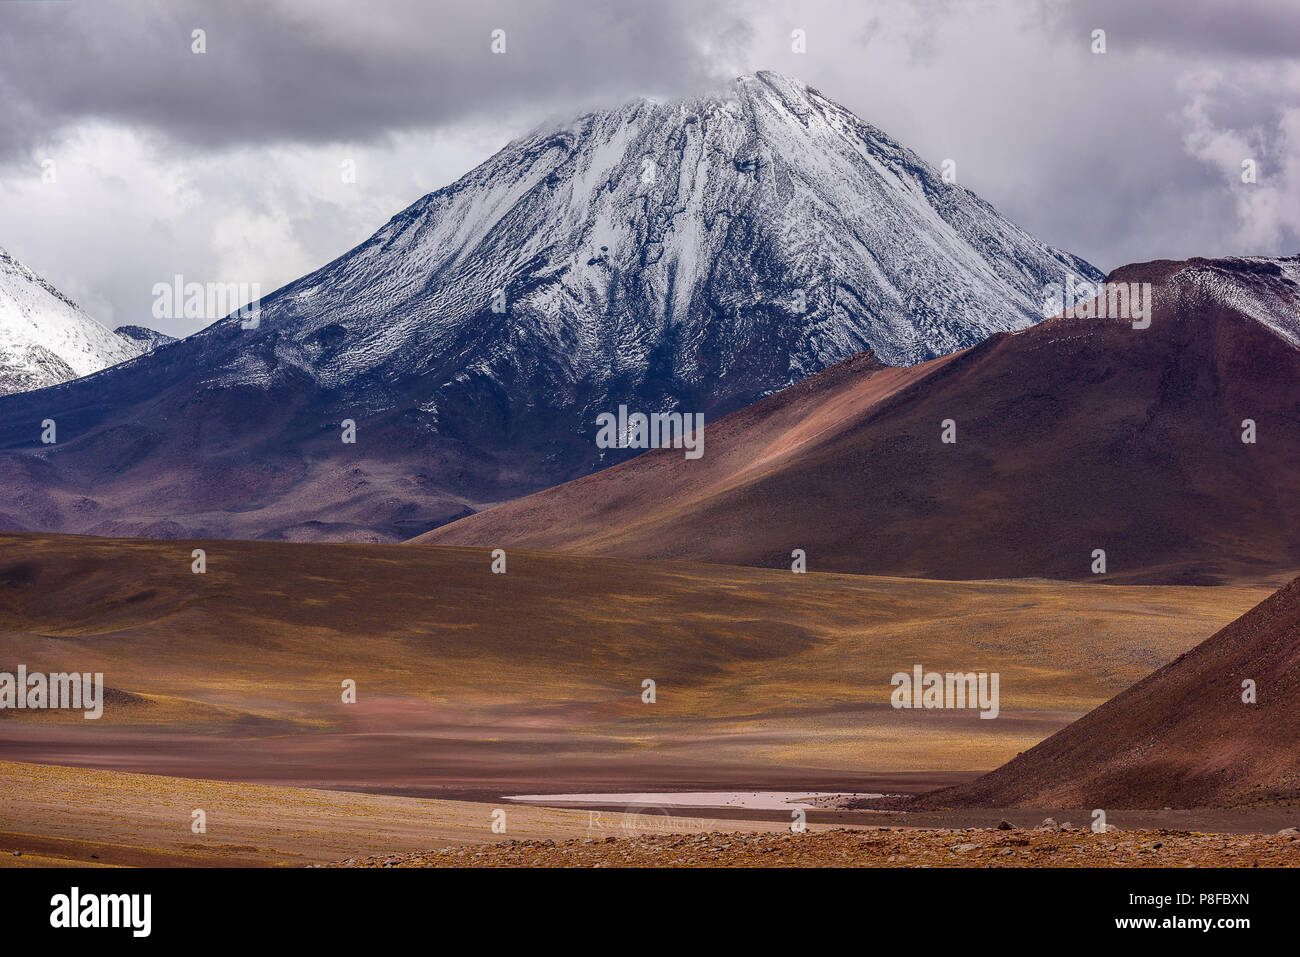 Mountain landscape, Socaire, El Loa, Antofagasta, Chile Stock Photo